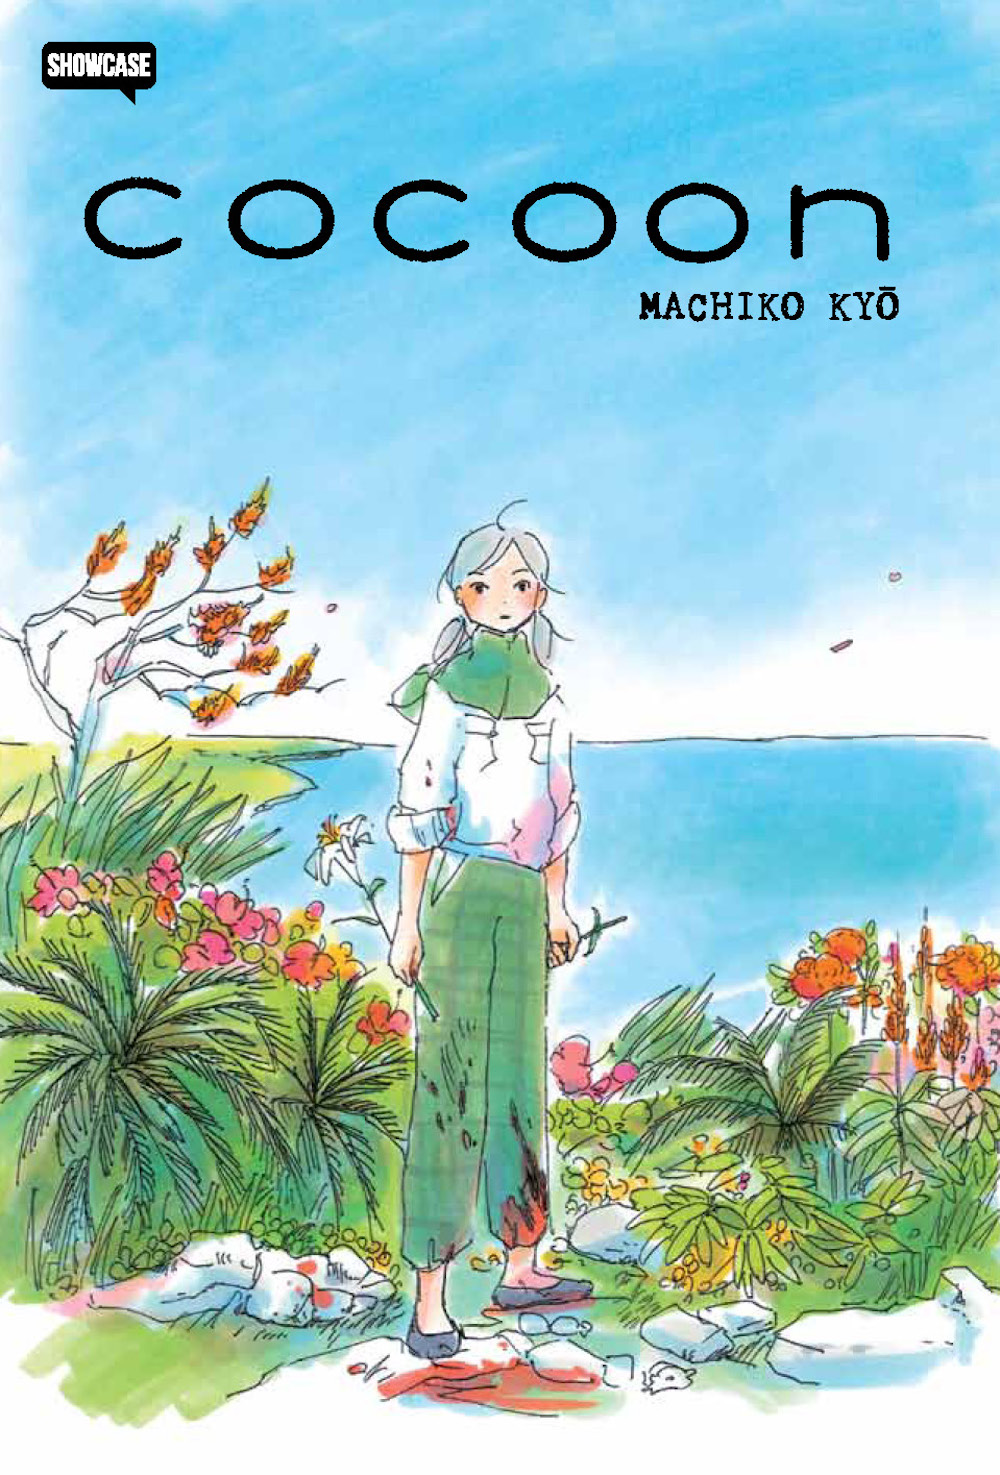 Machiko Kyo - Cocoon